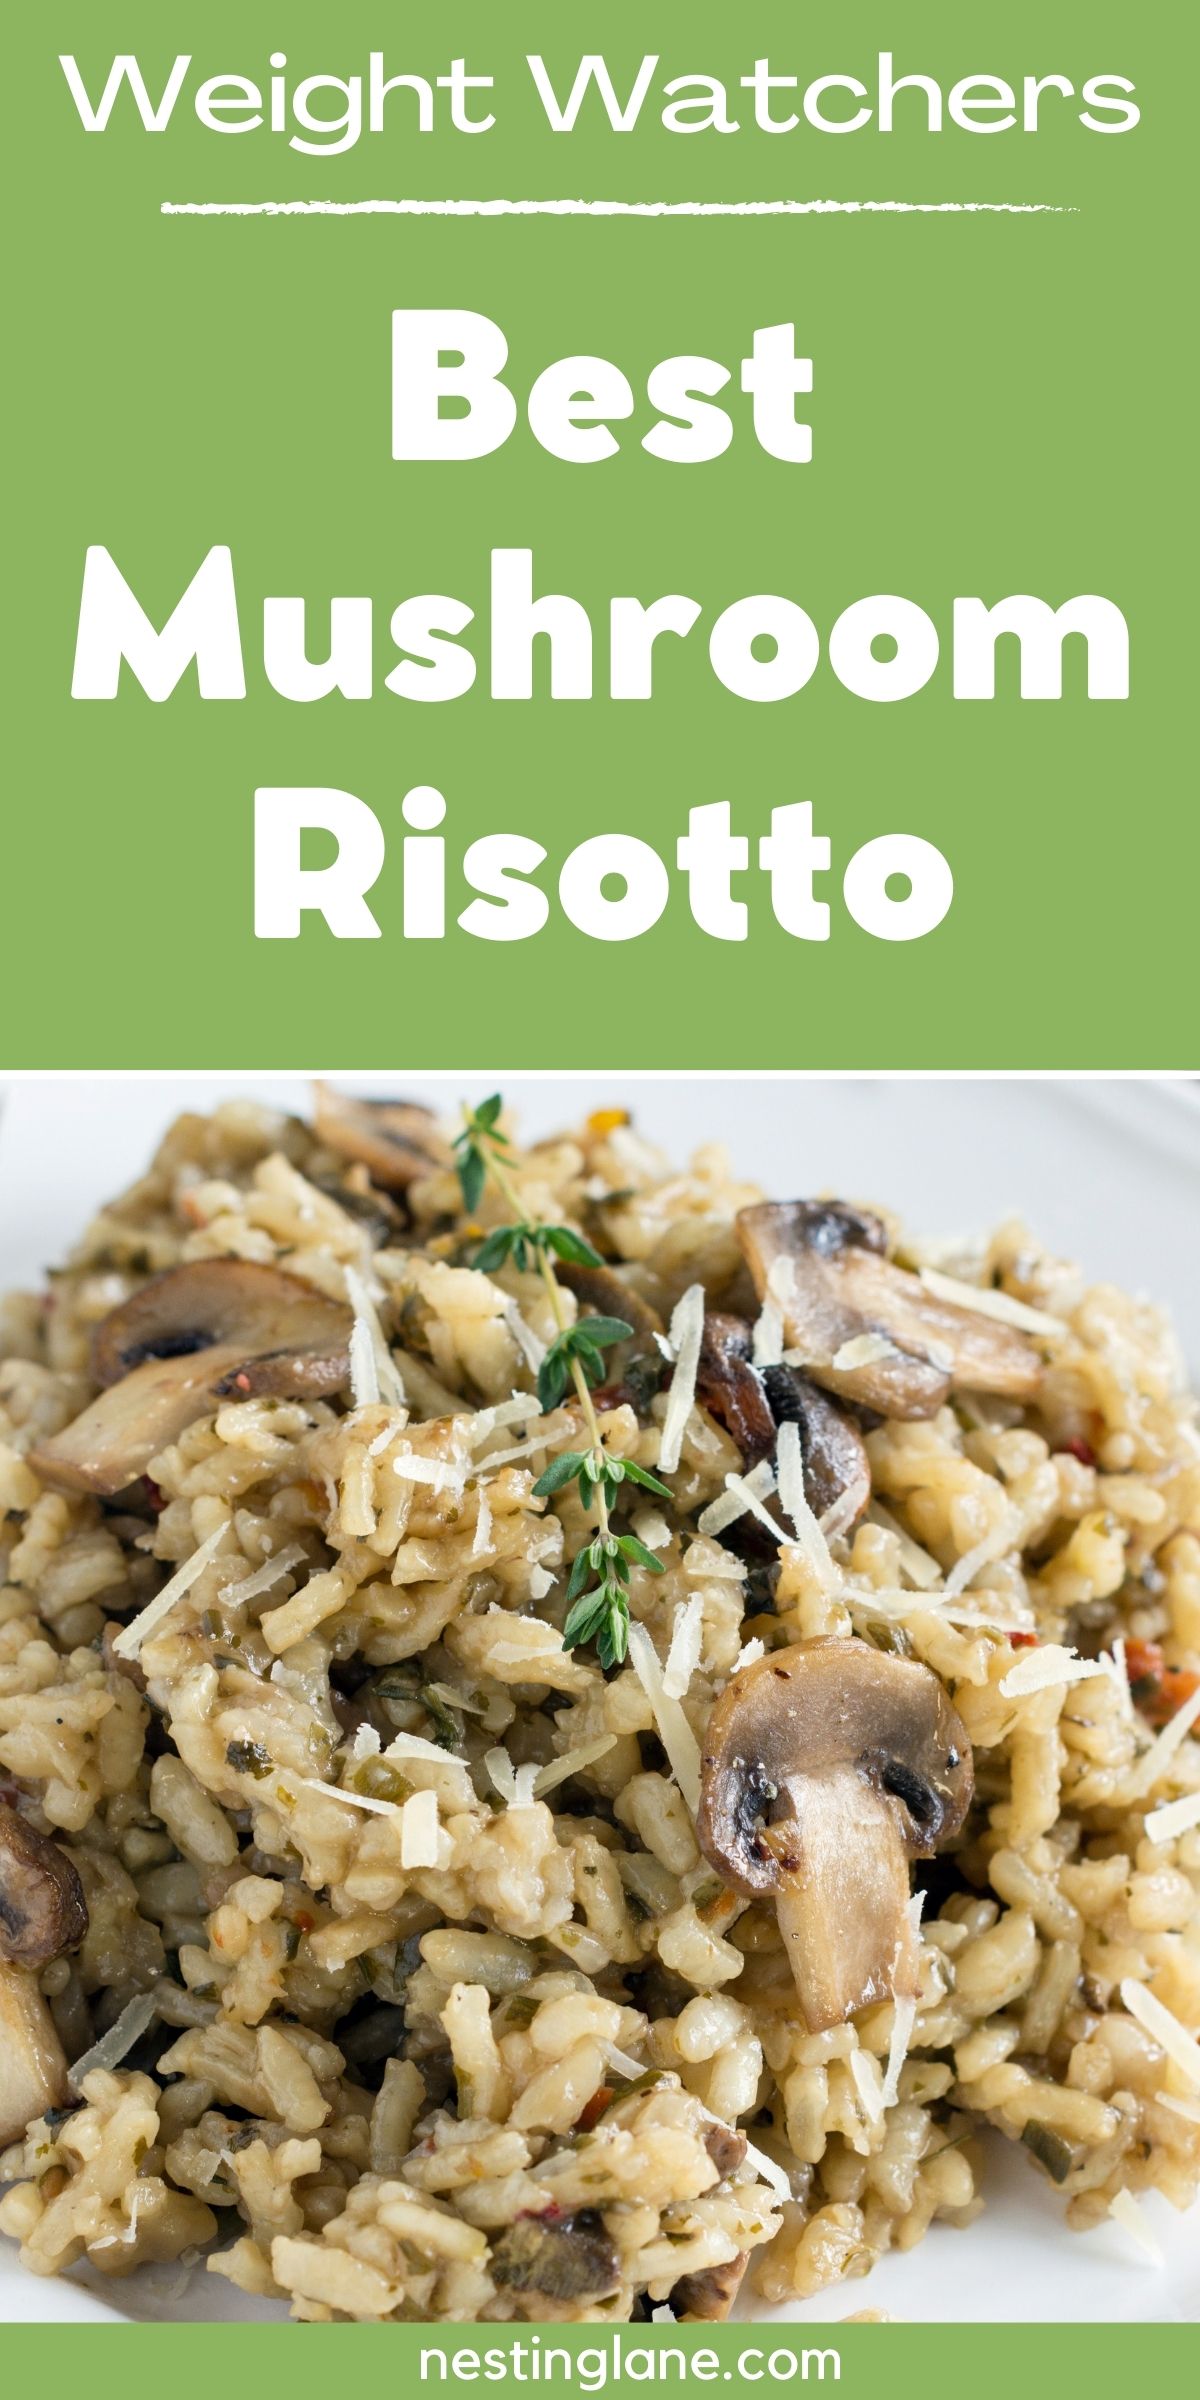 Best Weight Watchers Mushroom Risotto graphic.